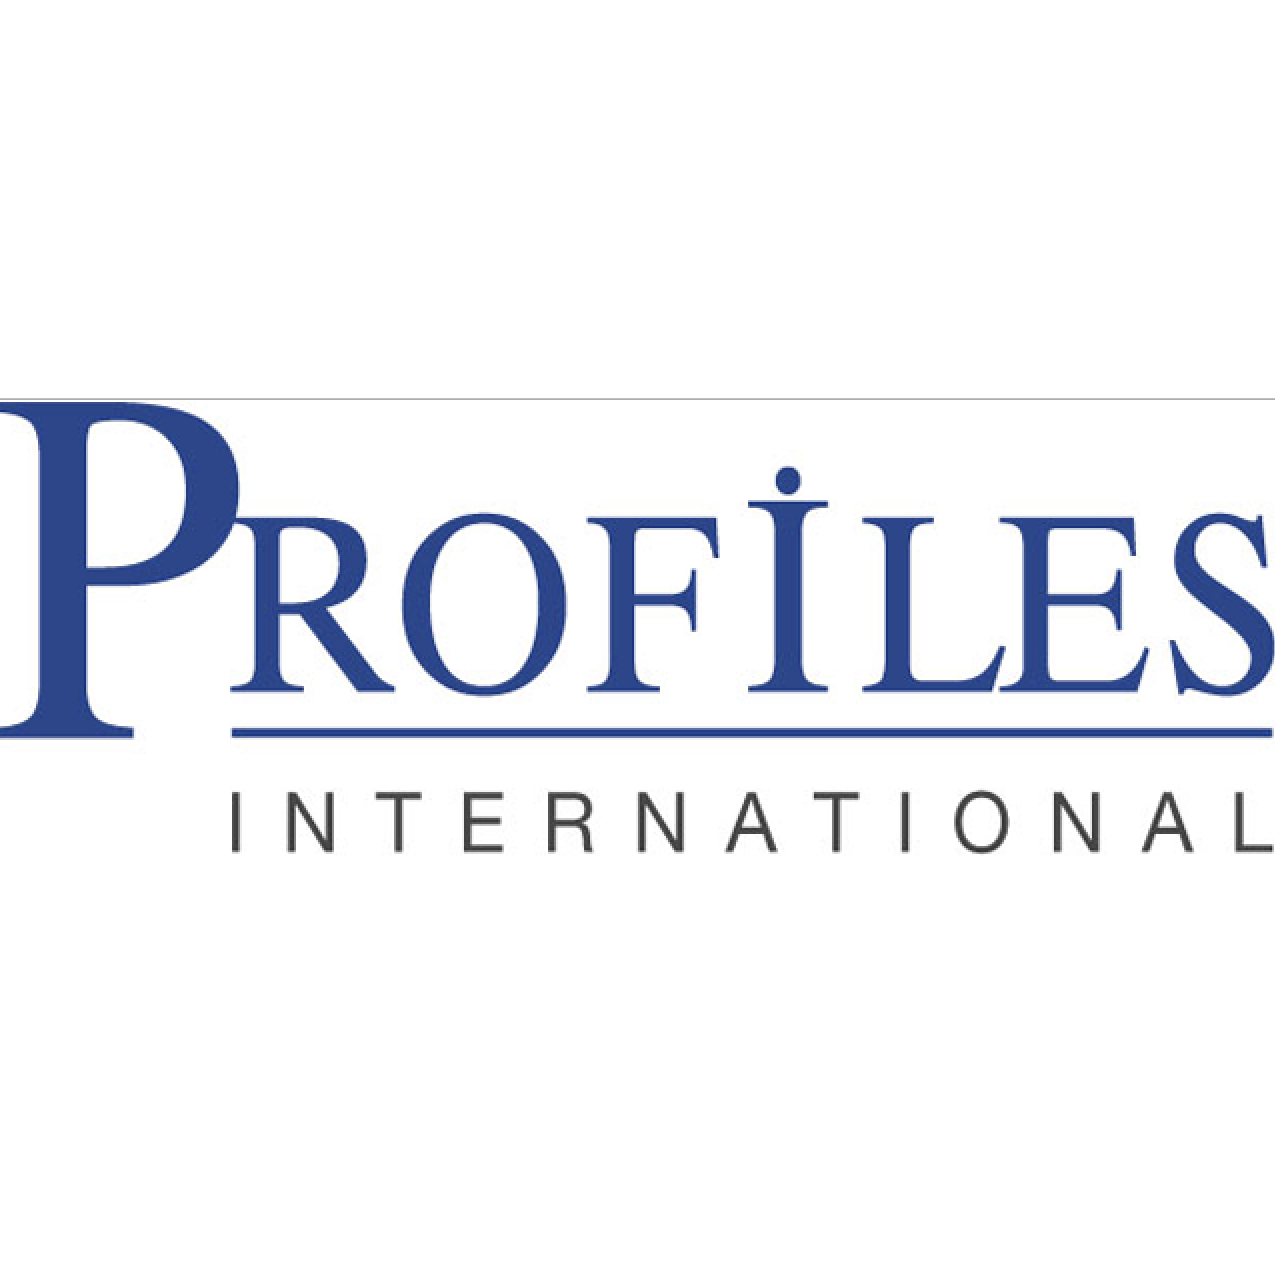 Profiles International logo